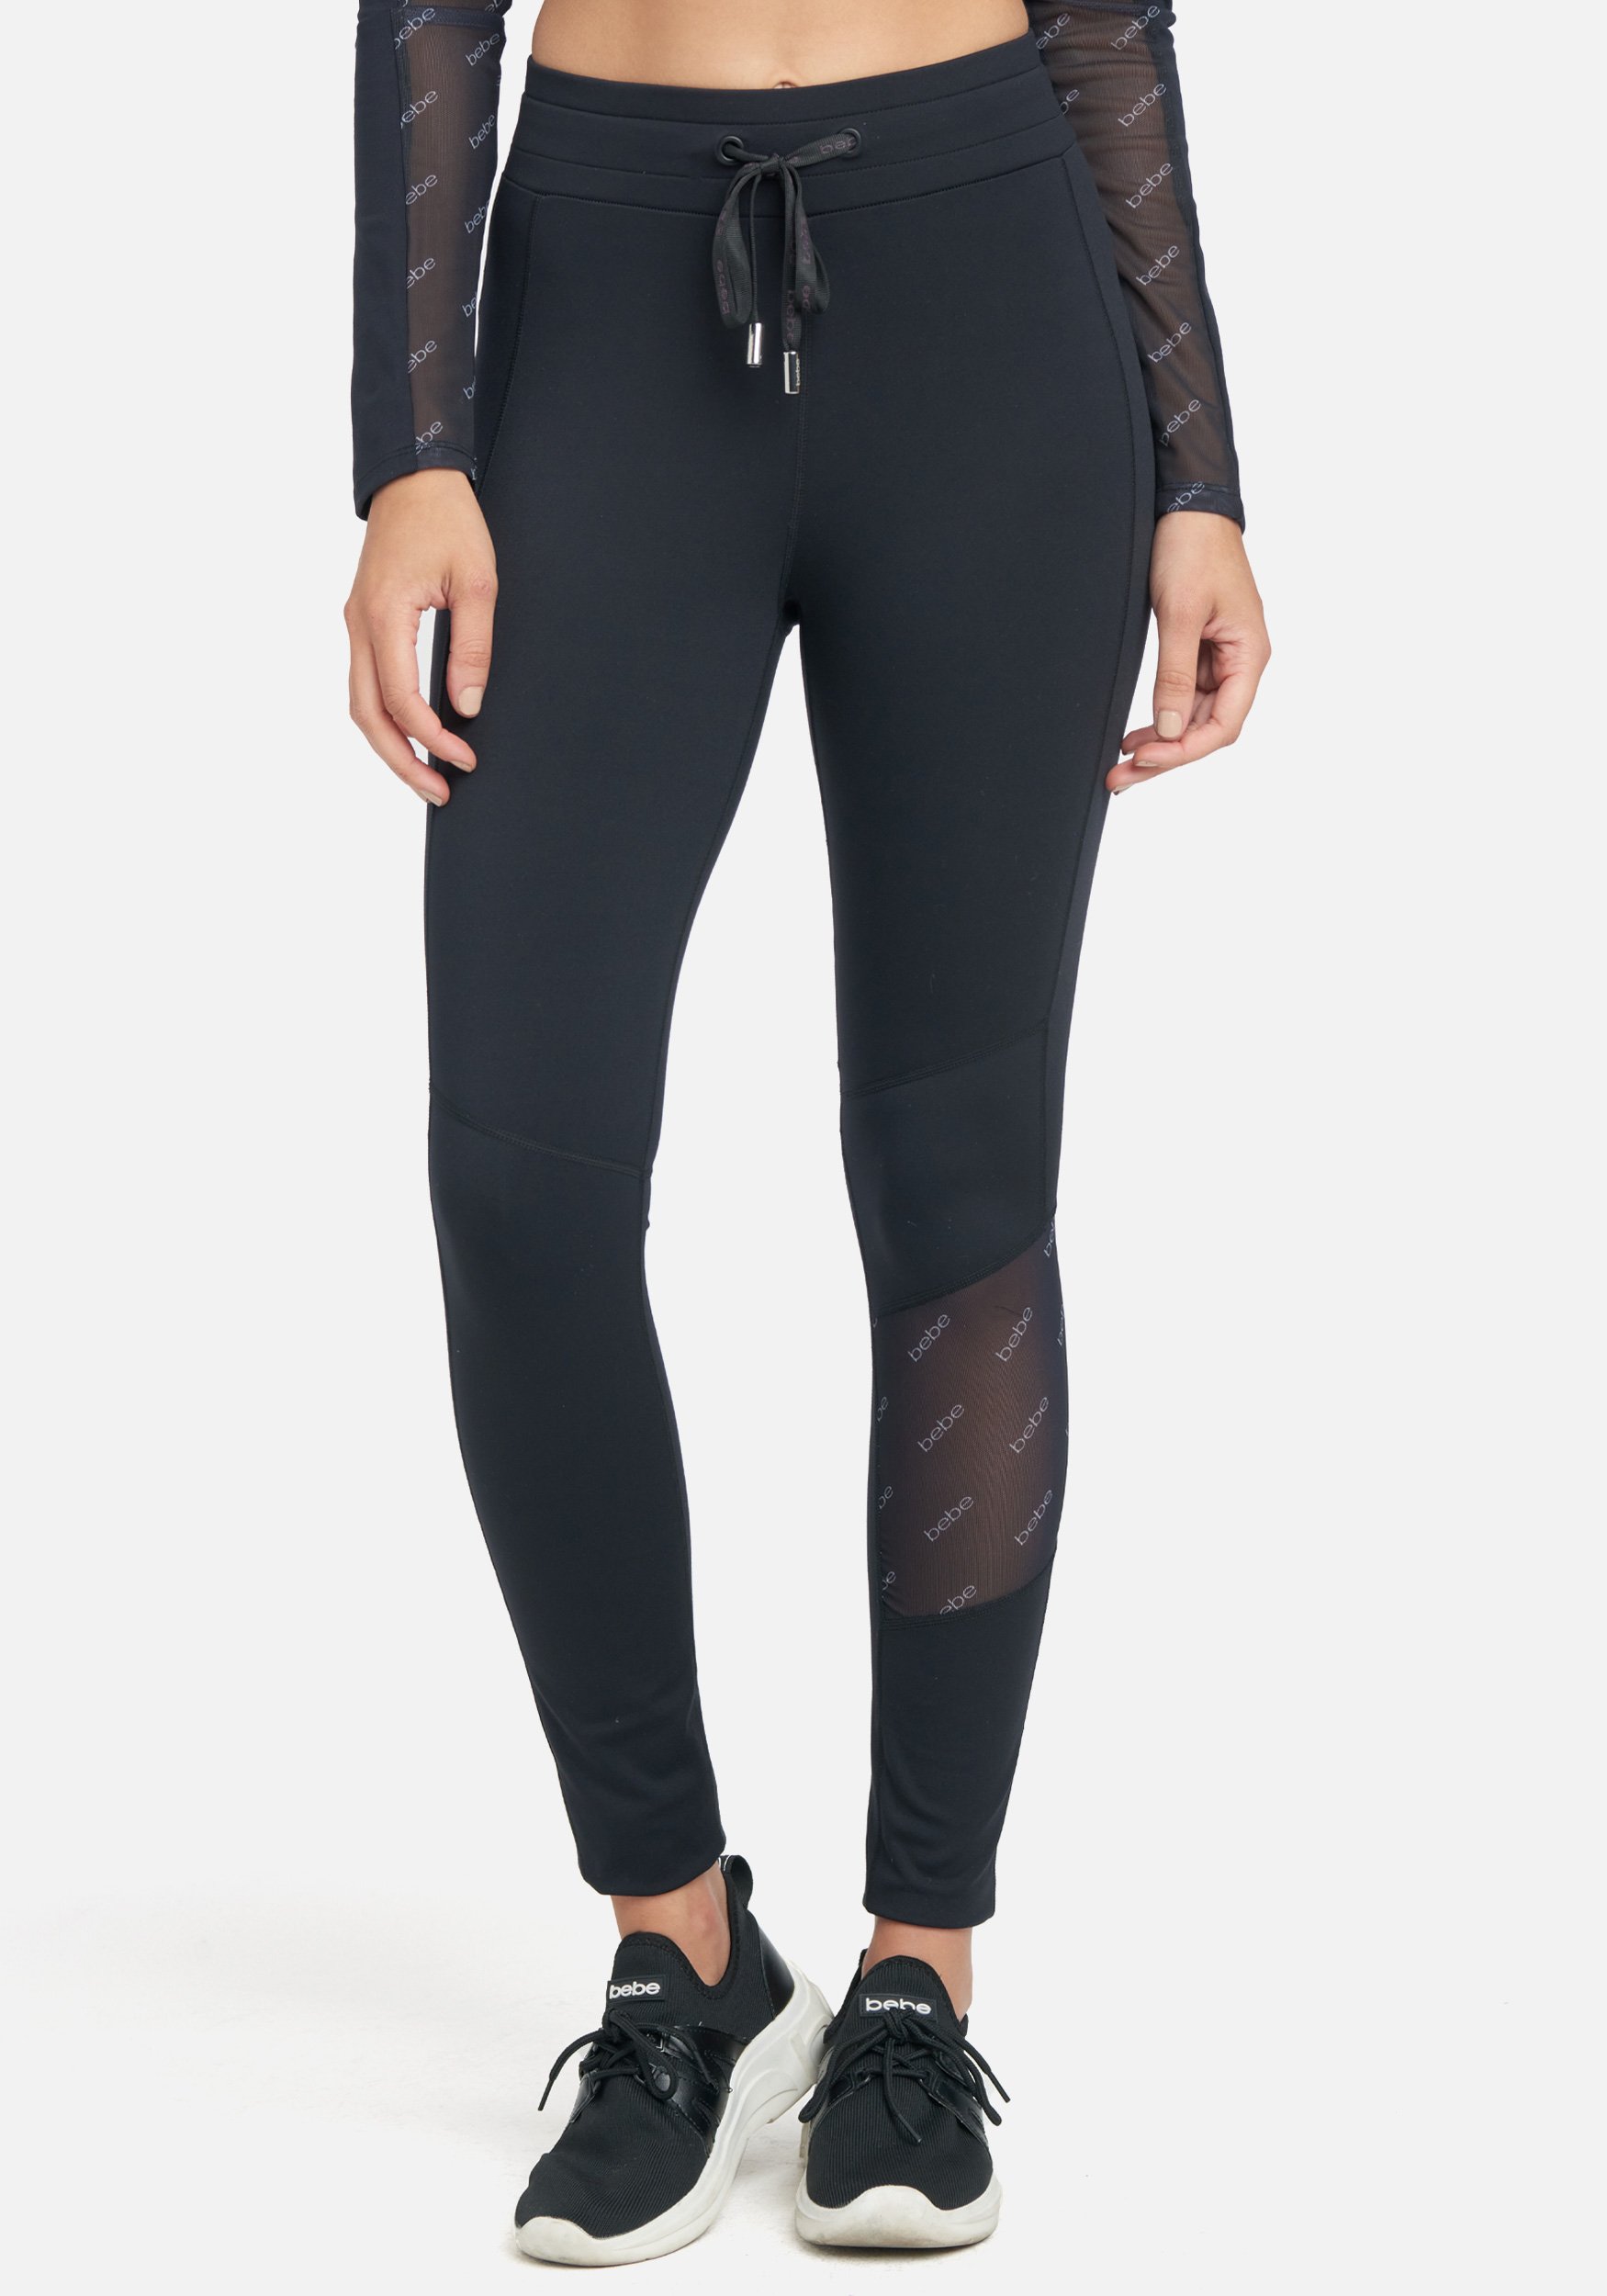 Women's Bebe Logo High Waist Knit With Mesh Legging, Size Medium in Black Spandex/Nylon